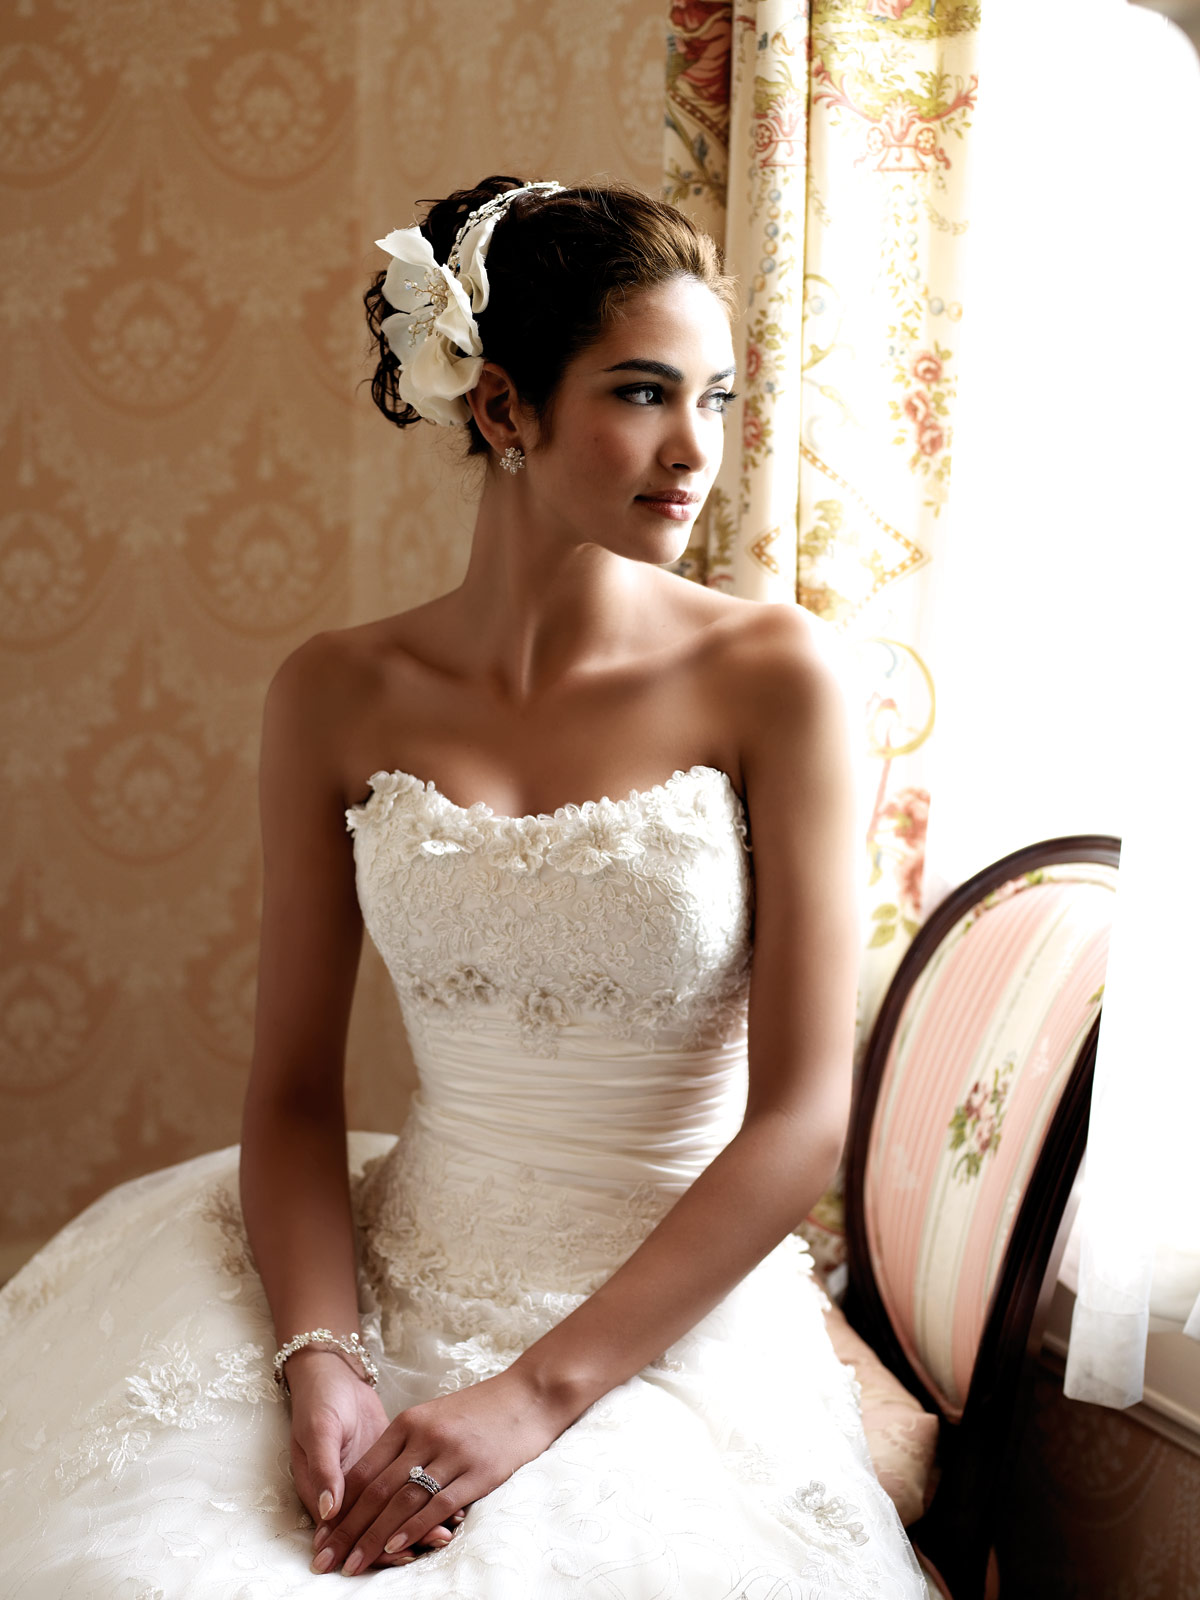 Amelishan Bridal: August 2010